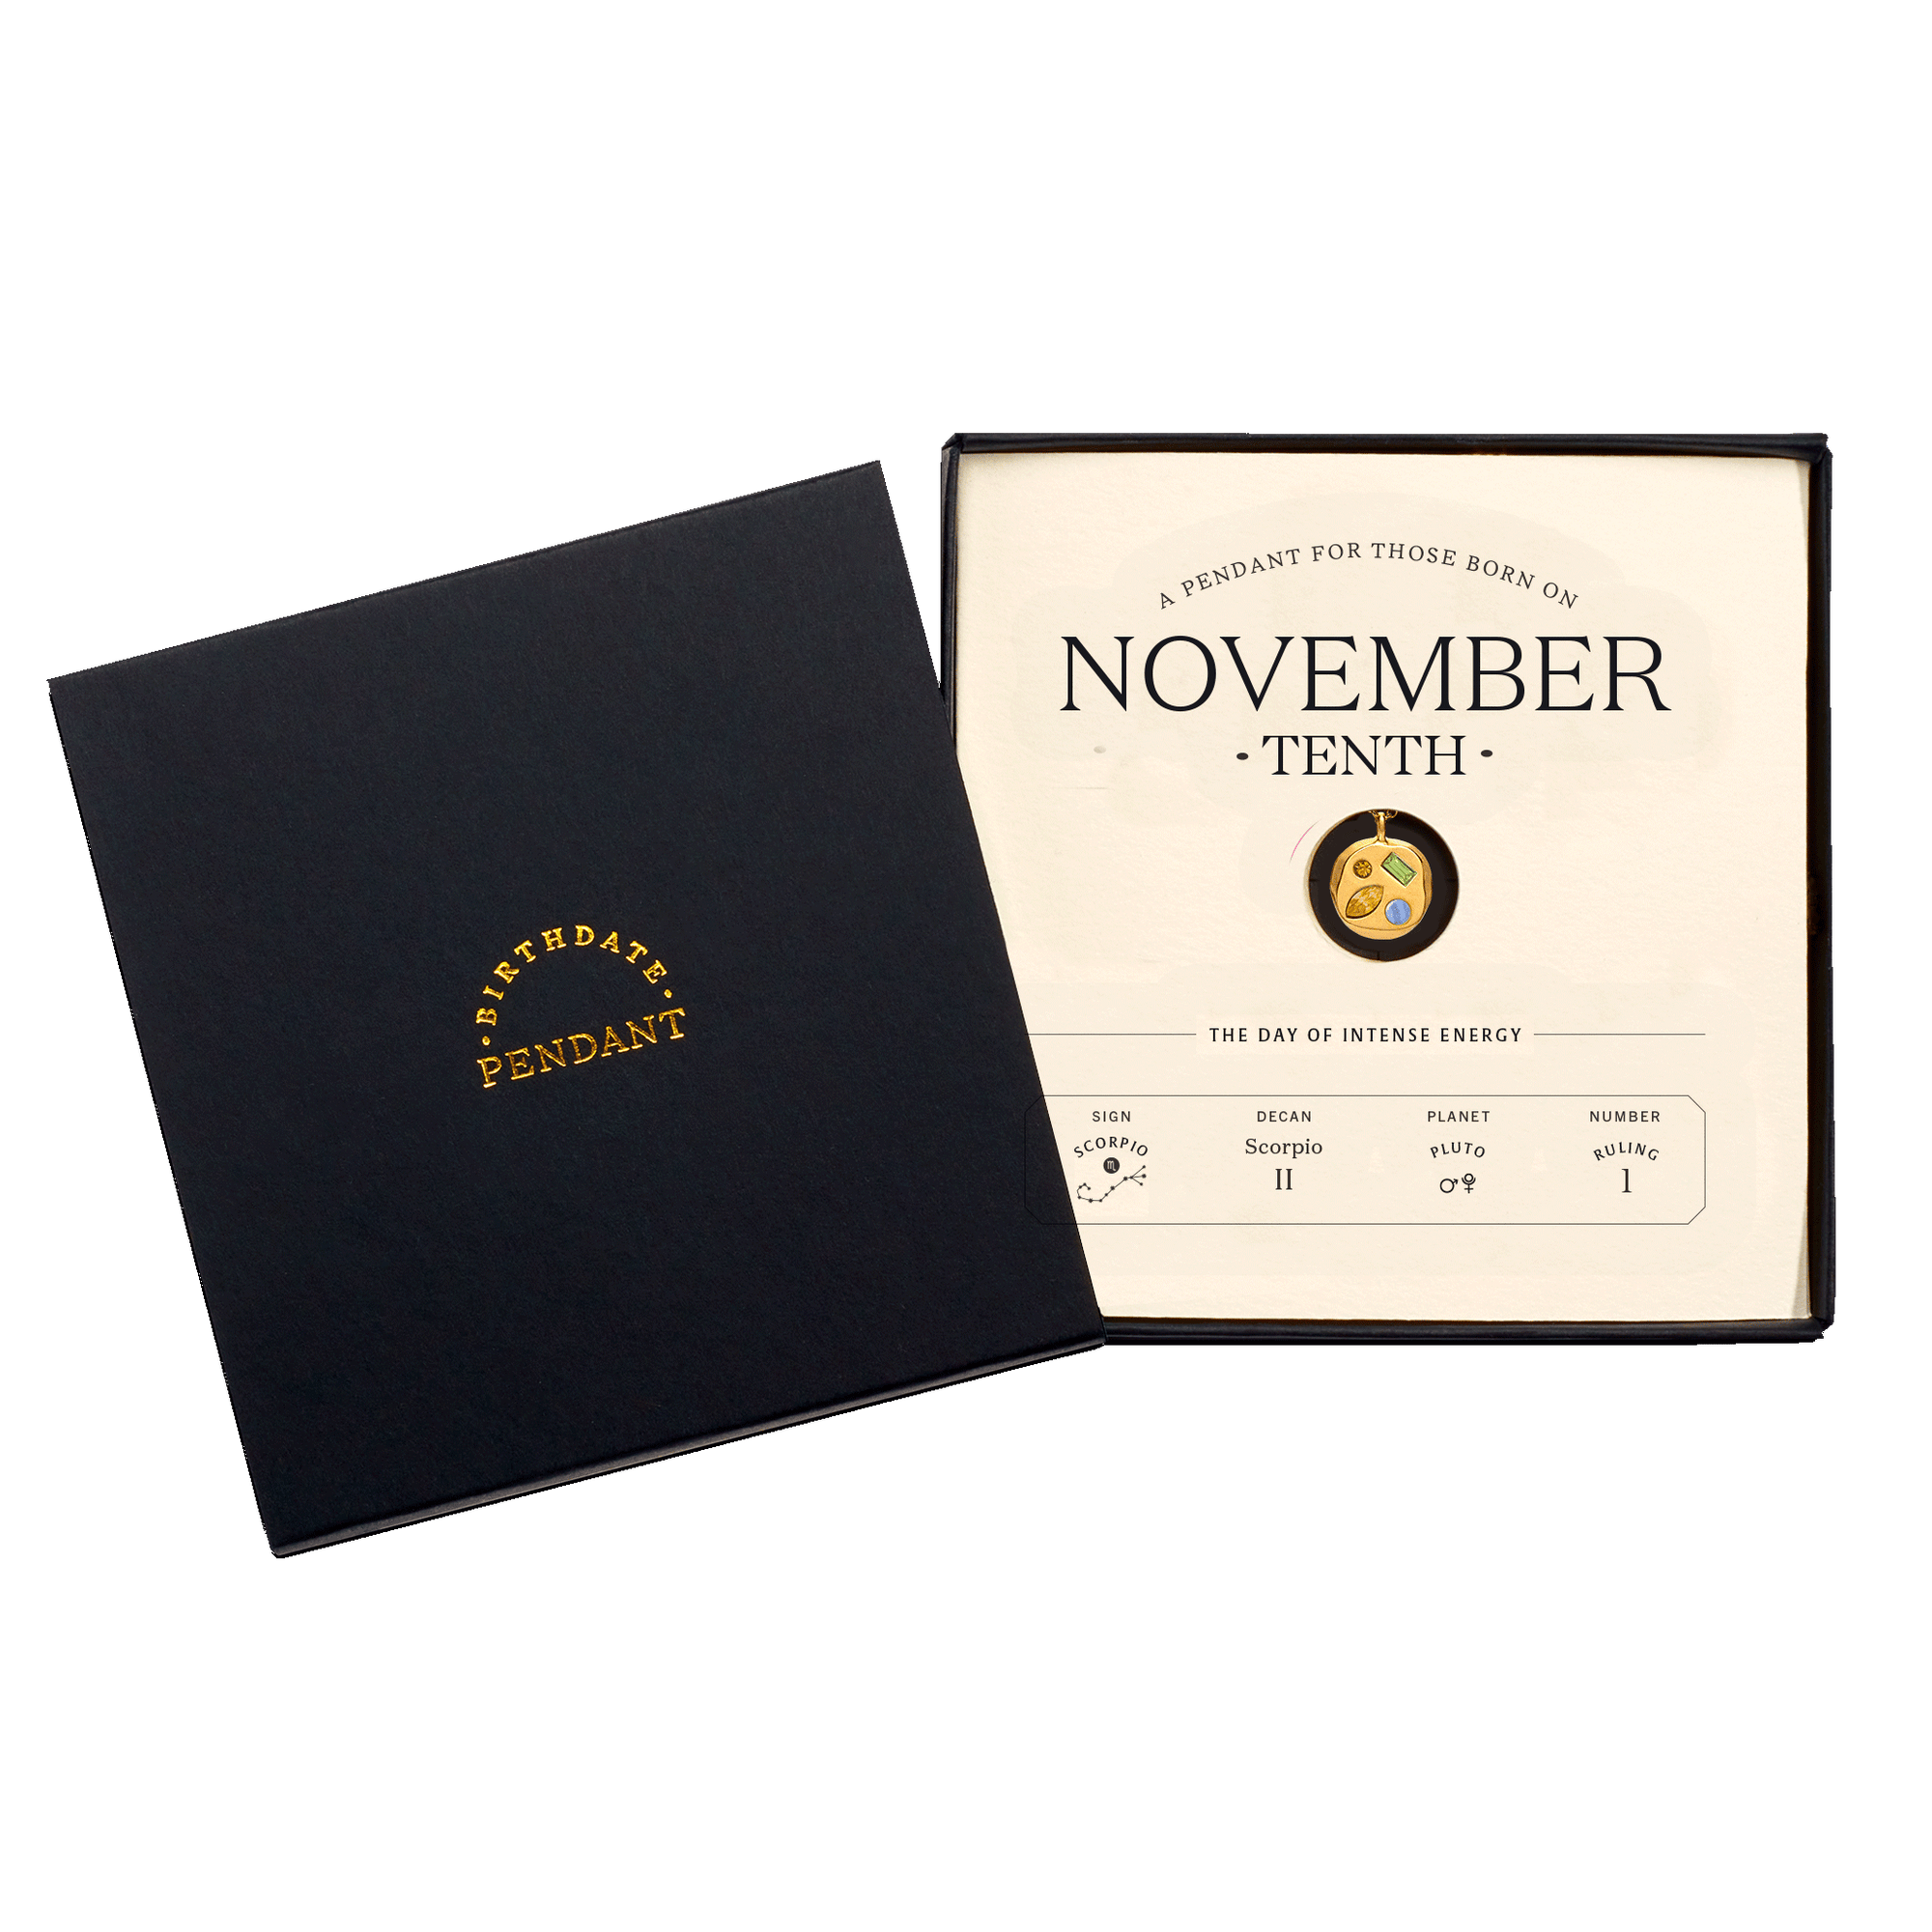 The November Tenth Pendant inside its box